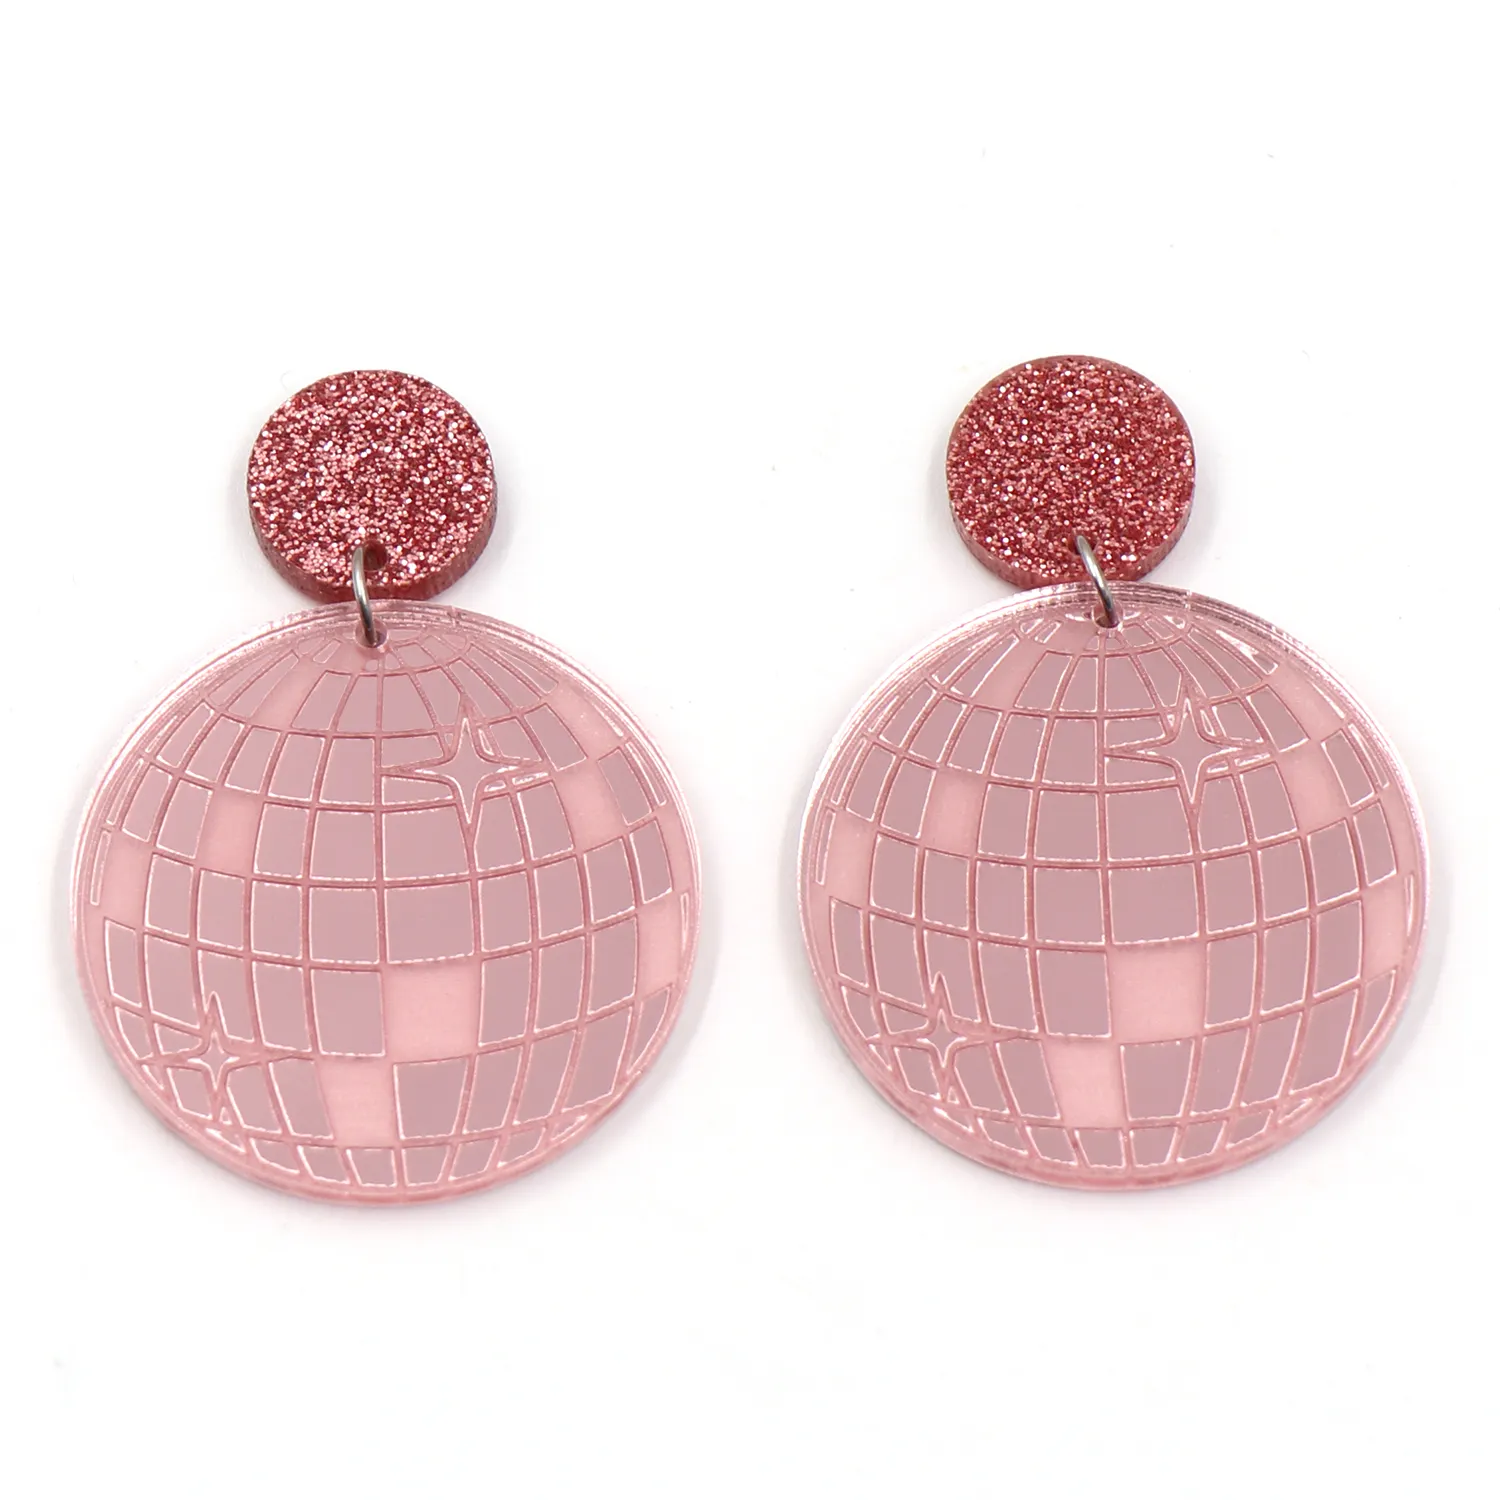 Syasibo brincos de acrílico femininos, joias de 1 par de moda cn drop disco